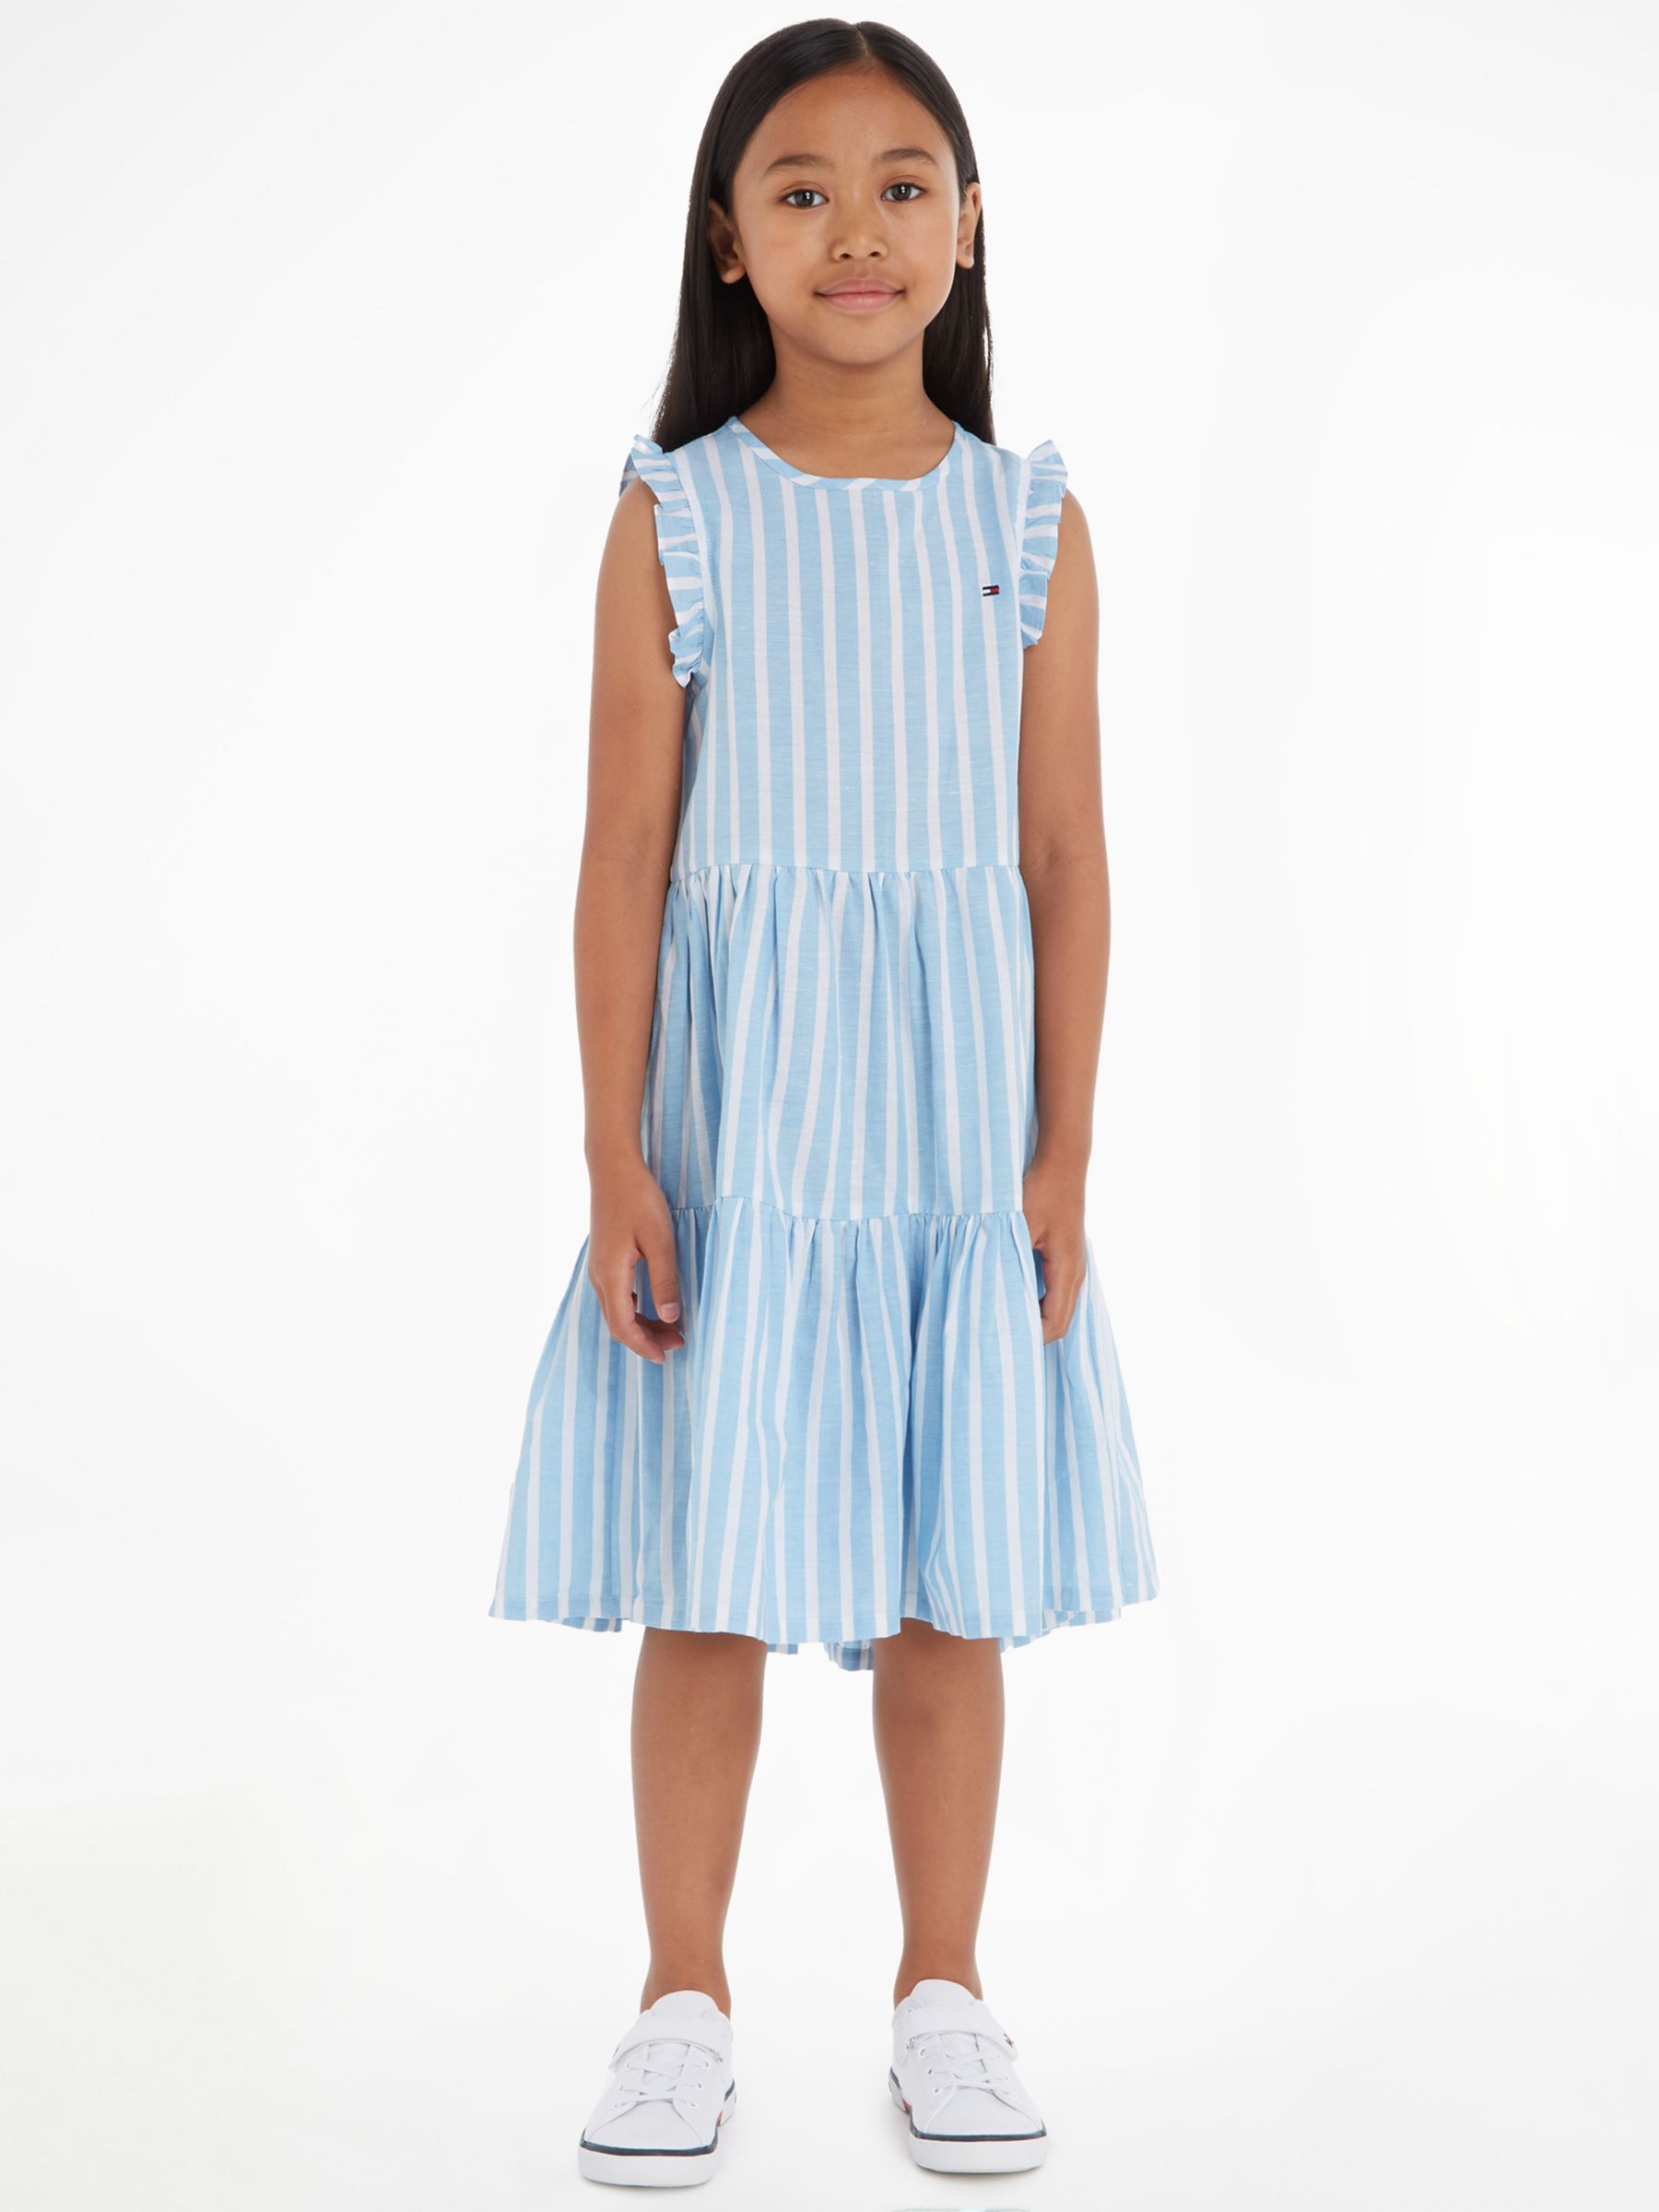 Tommy Hilfiger Girl's Ruffle Dress, Light Blue years